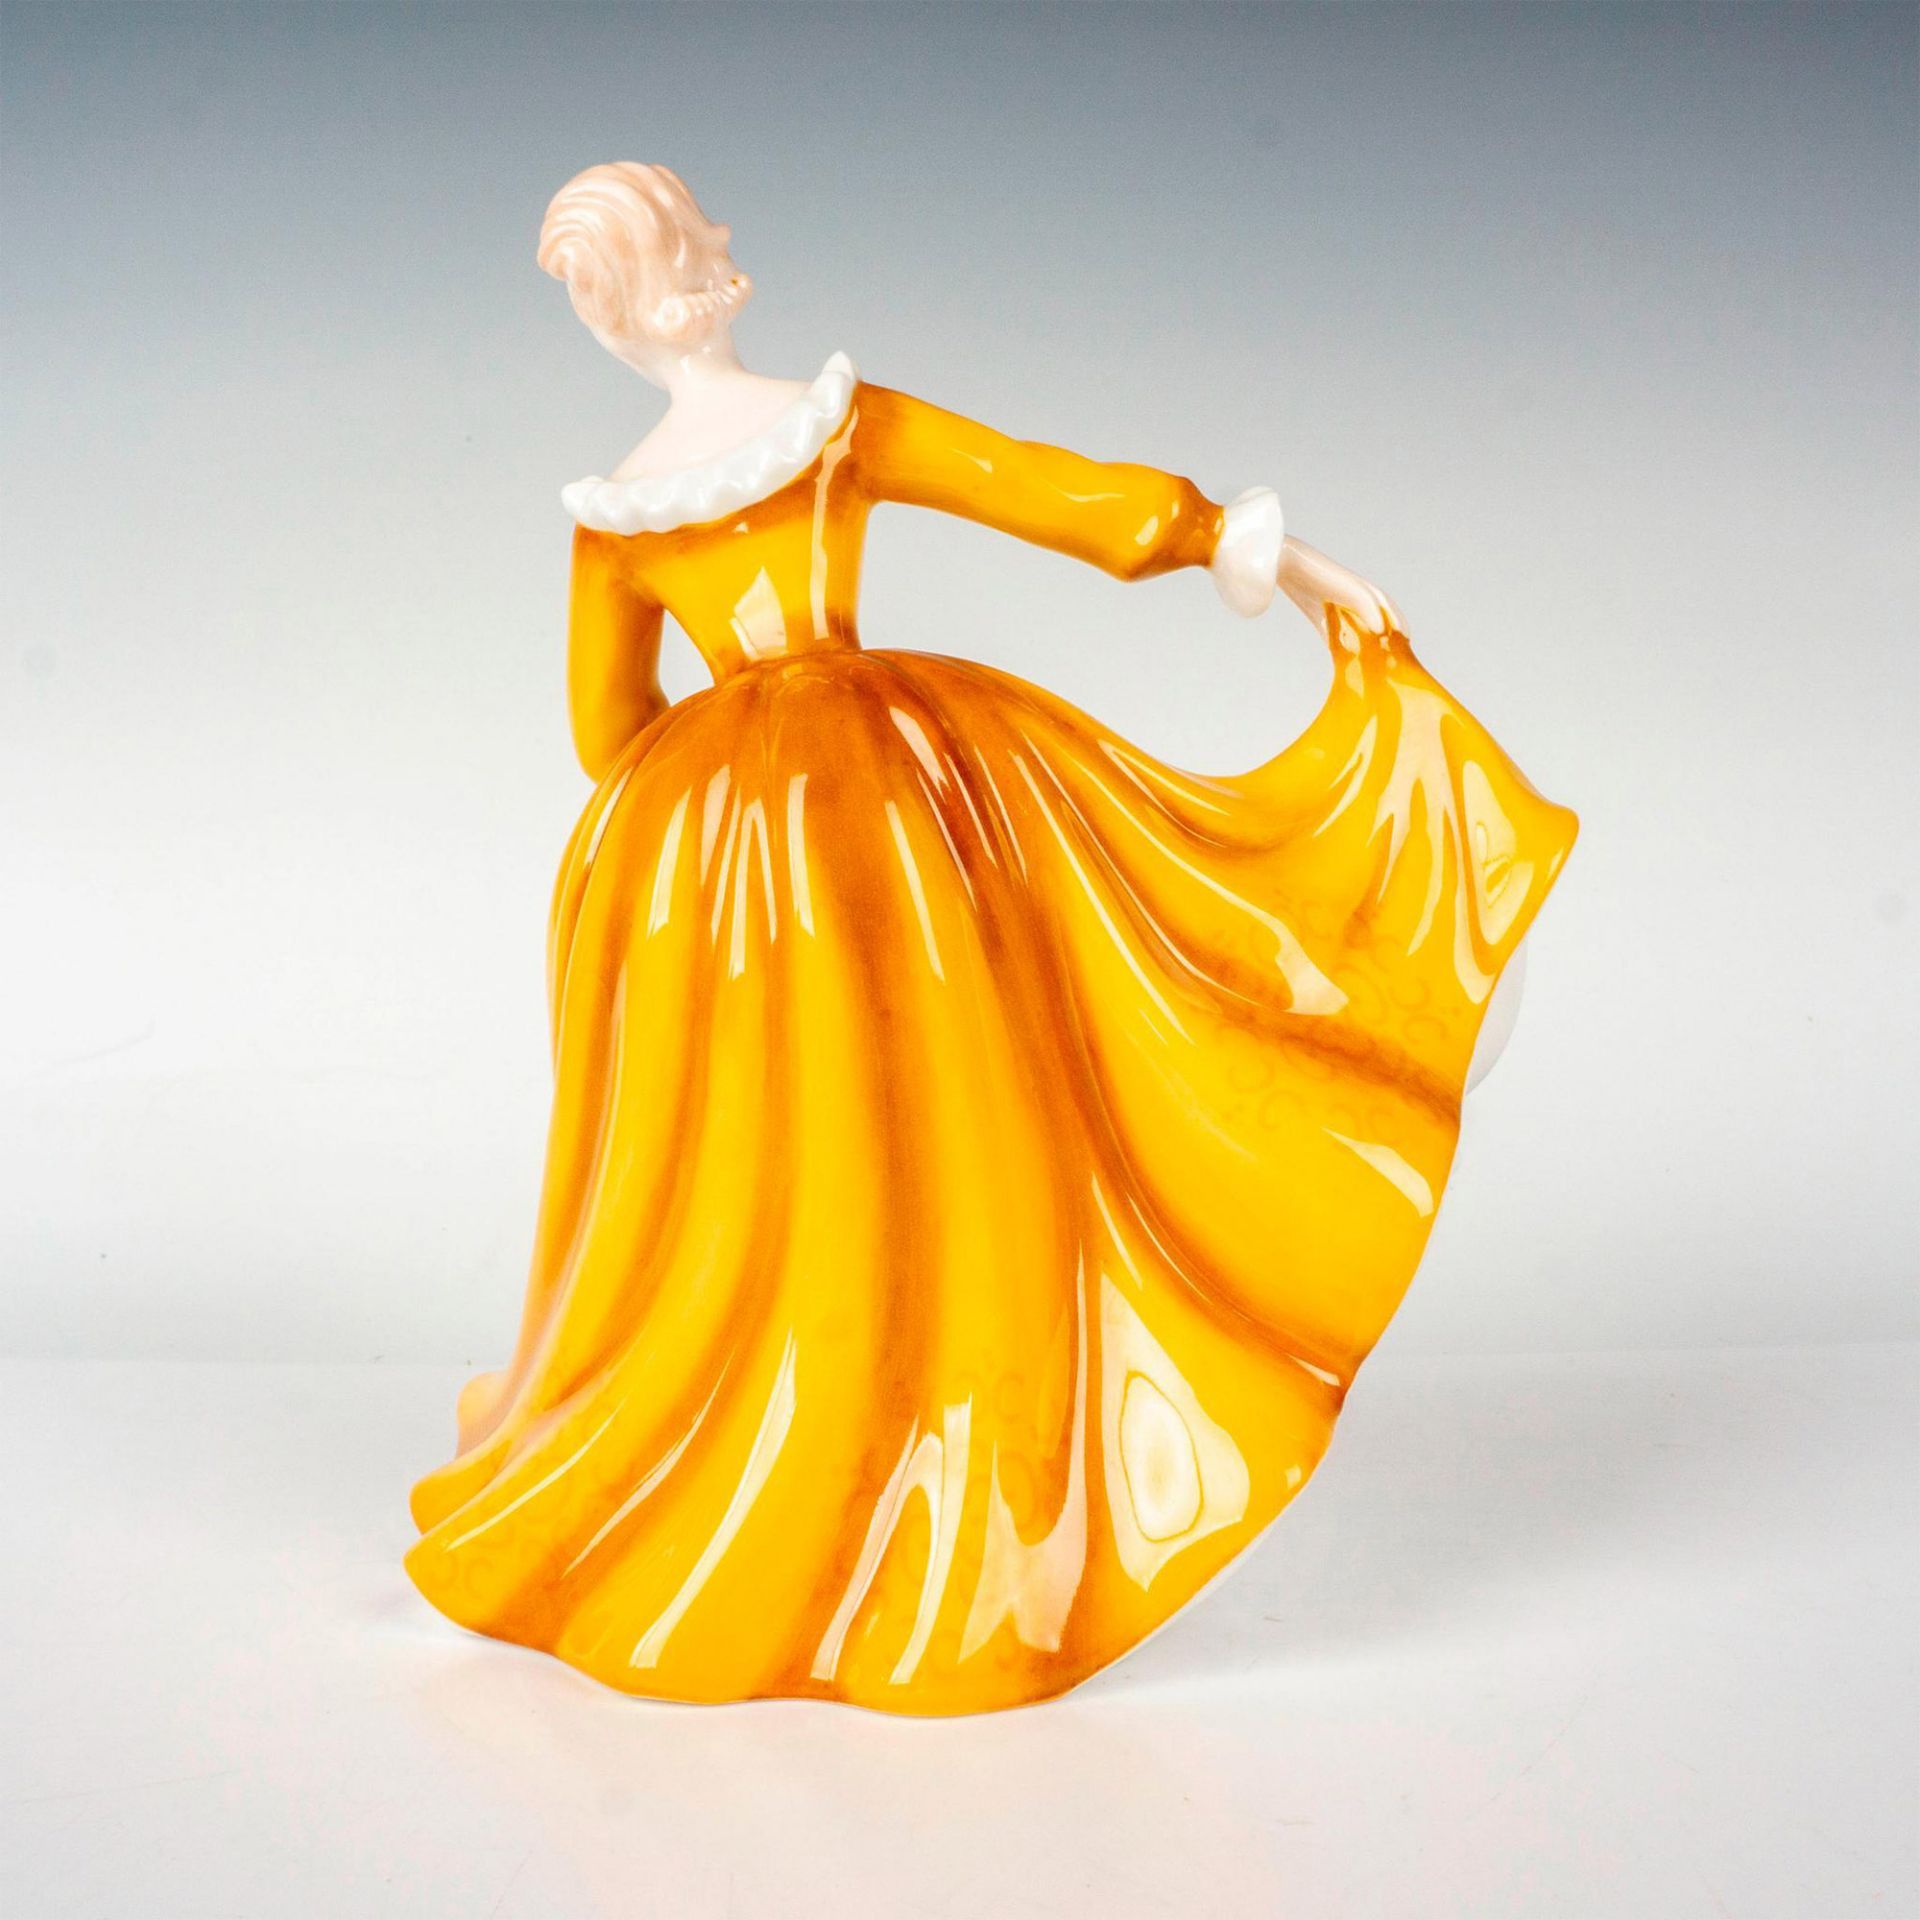 Kristy HN4783 - Royal Doulton Figurine - Image 2 of 3